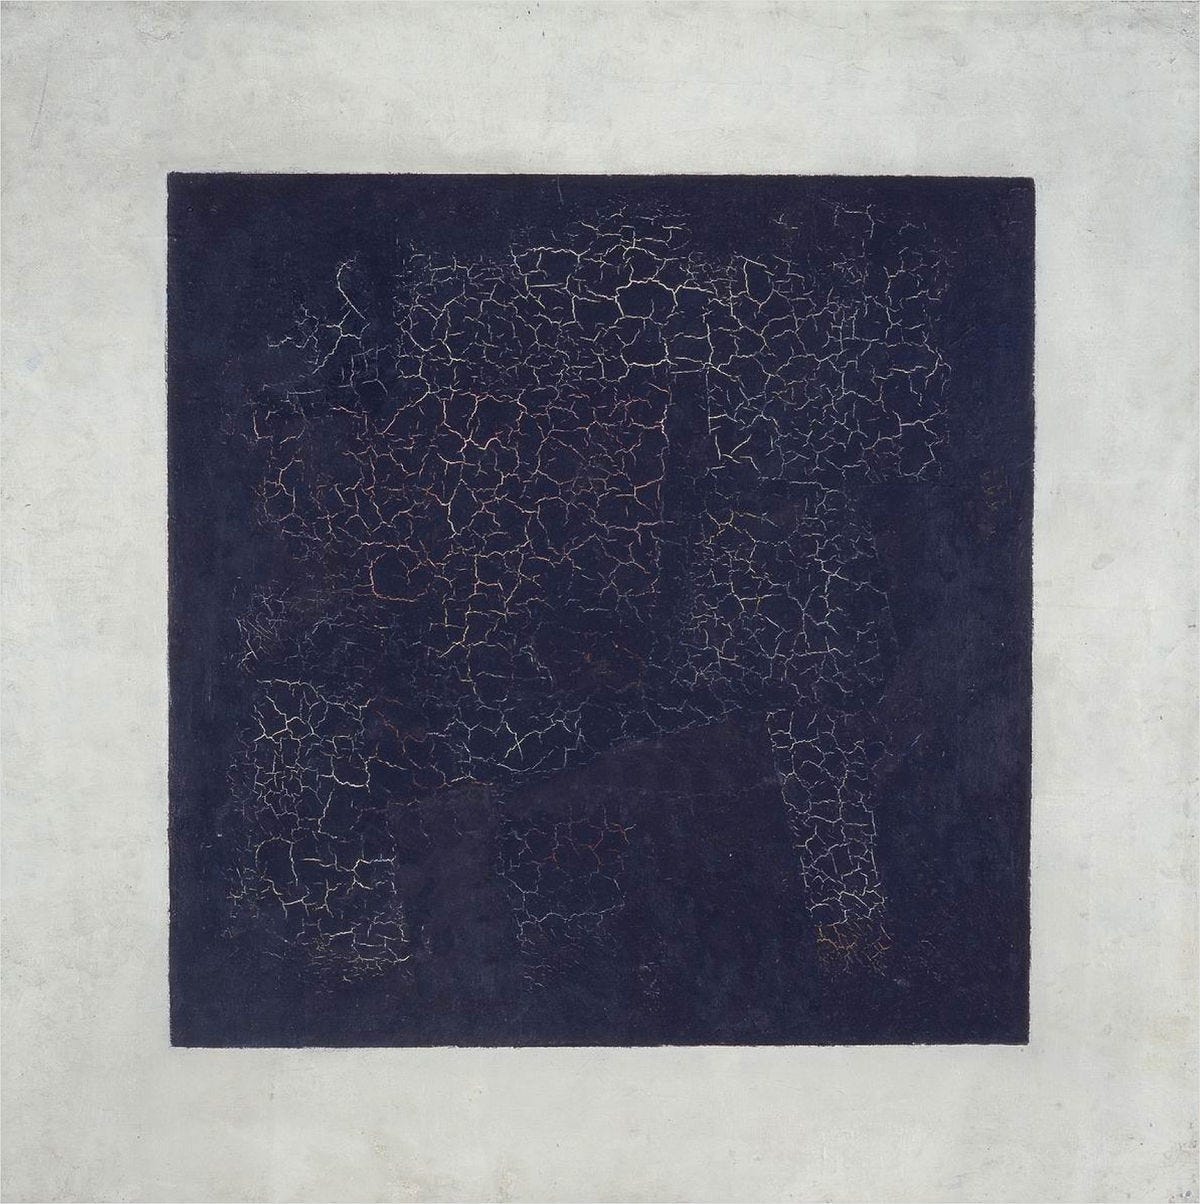 Black Square (painting) - Wikipedia